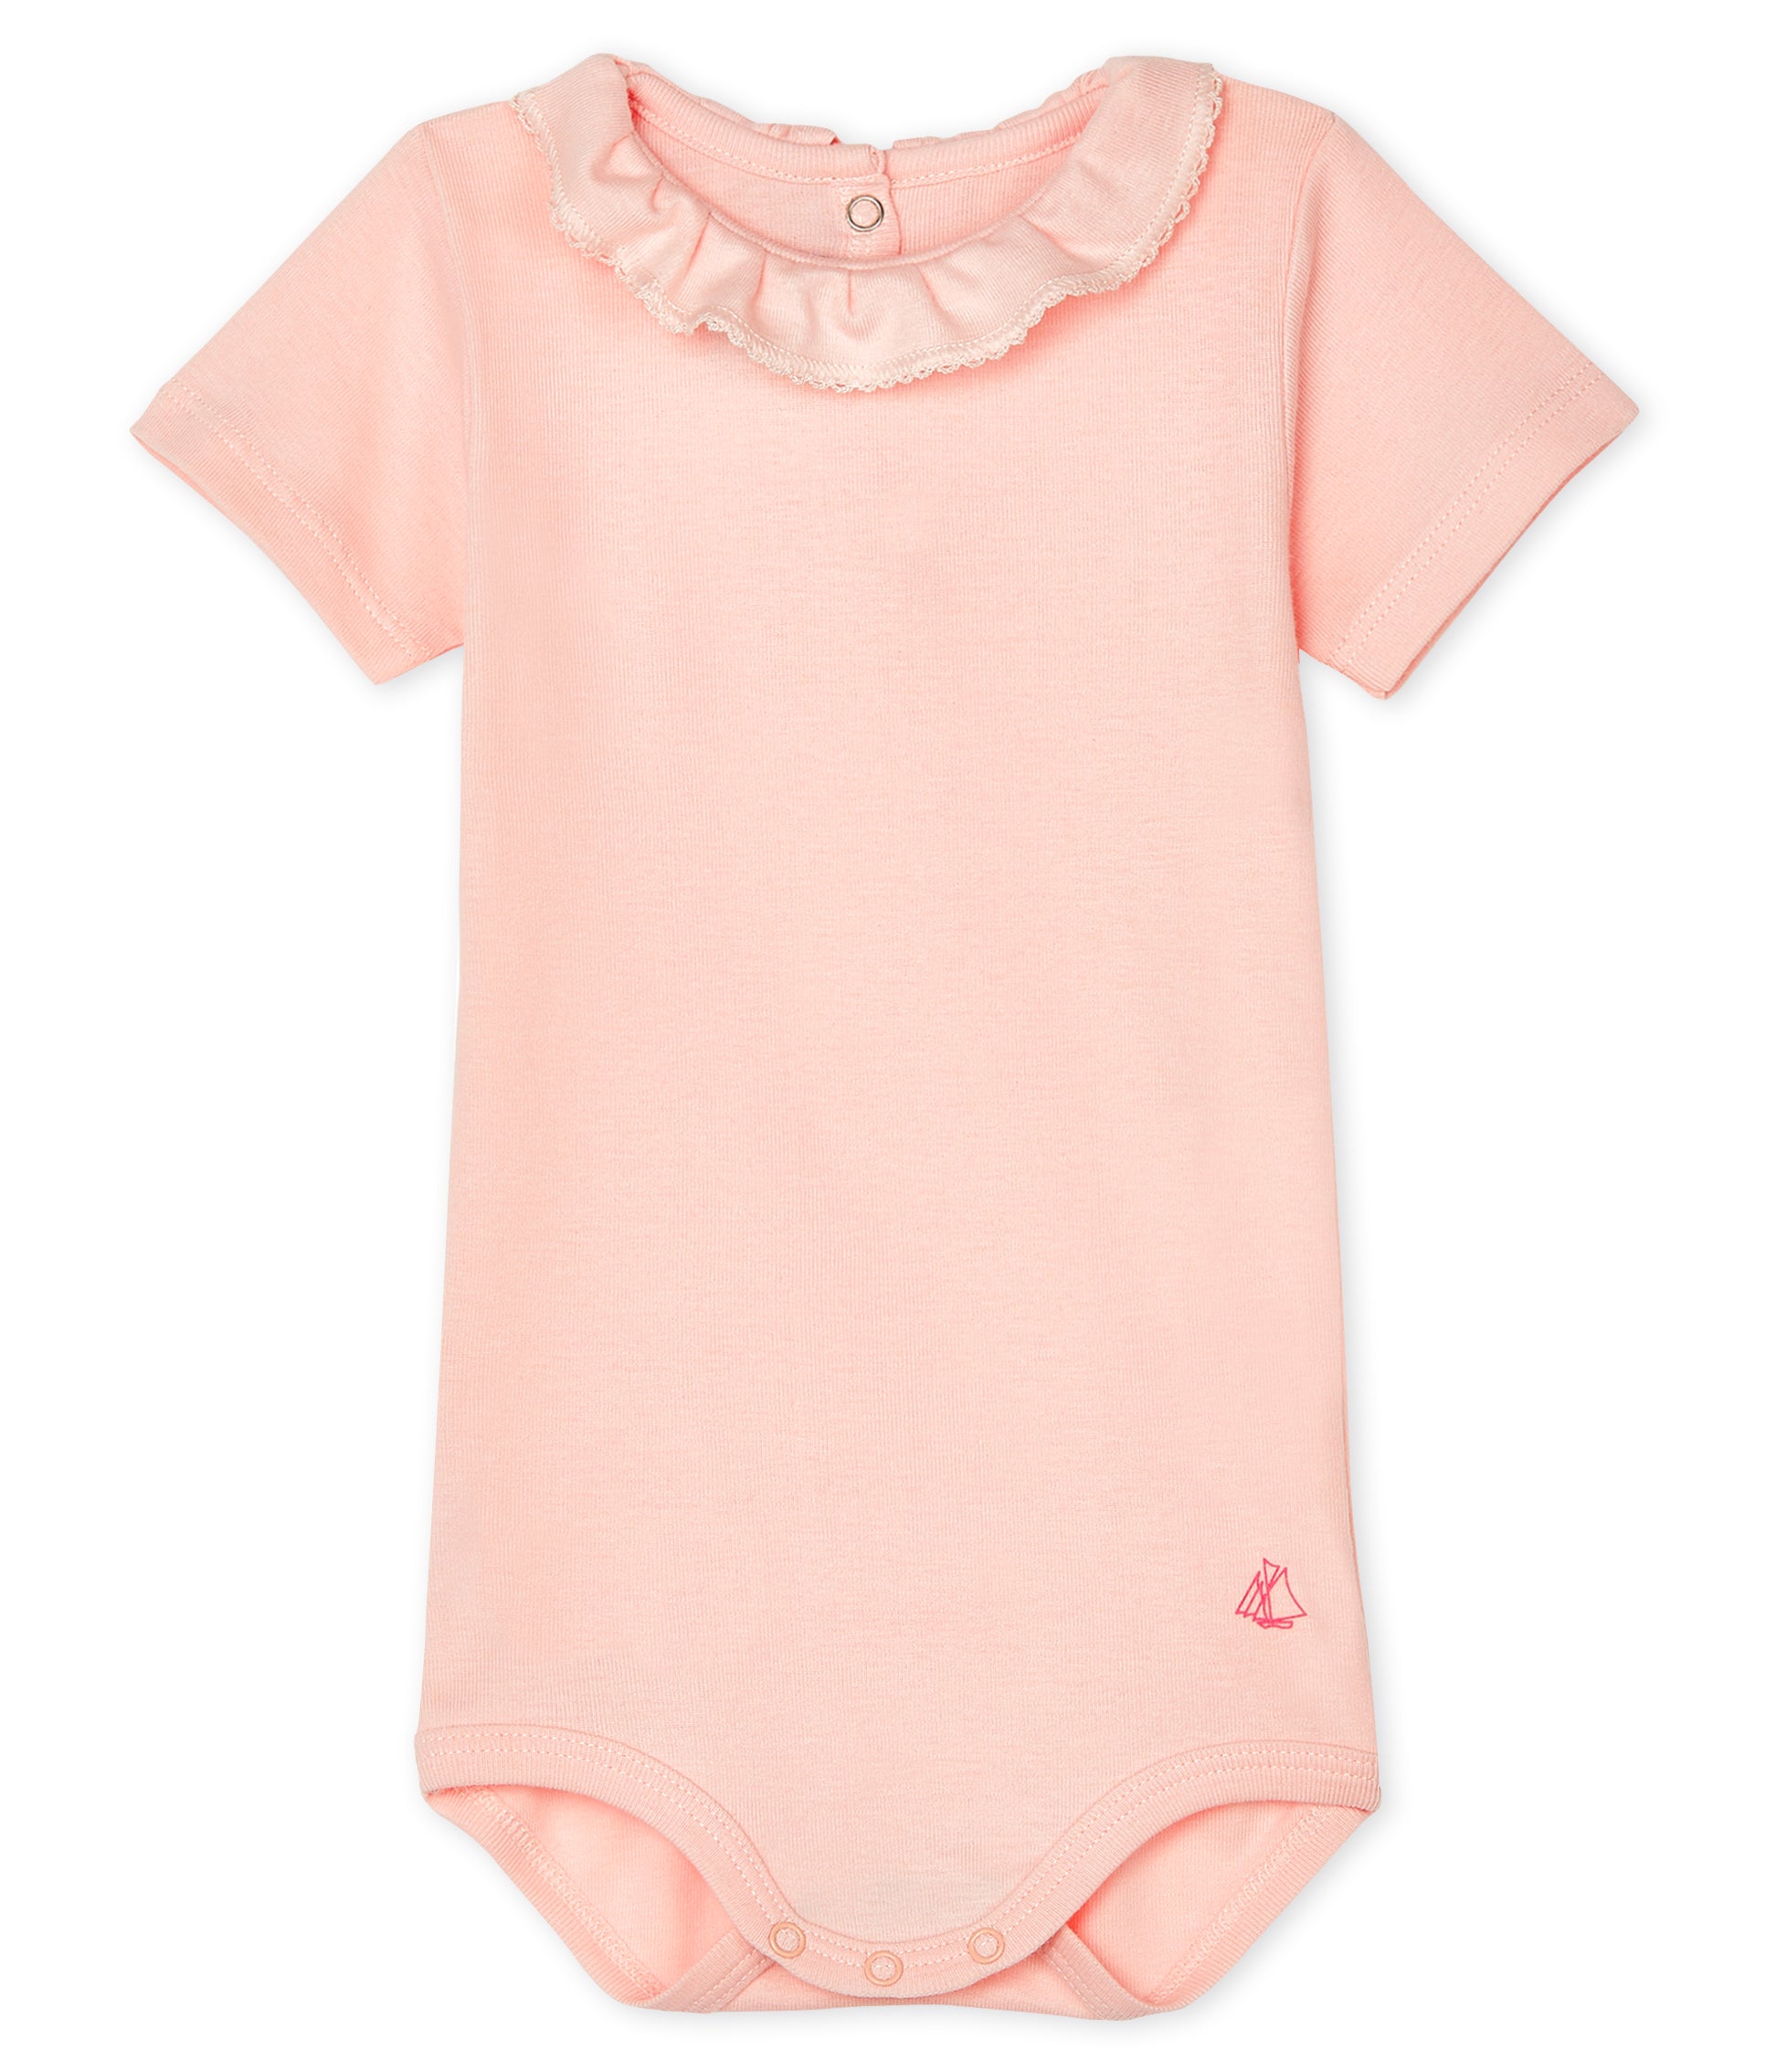 Baby Girls Pink Cotton Babysuit